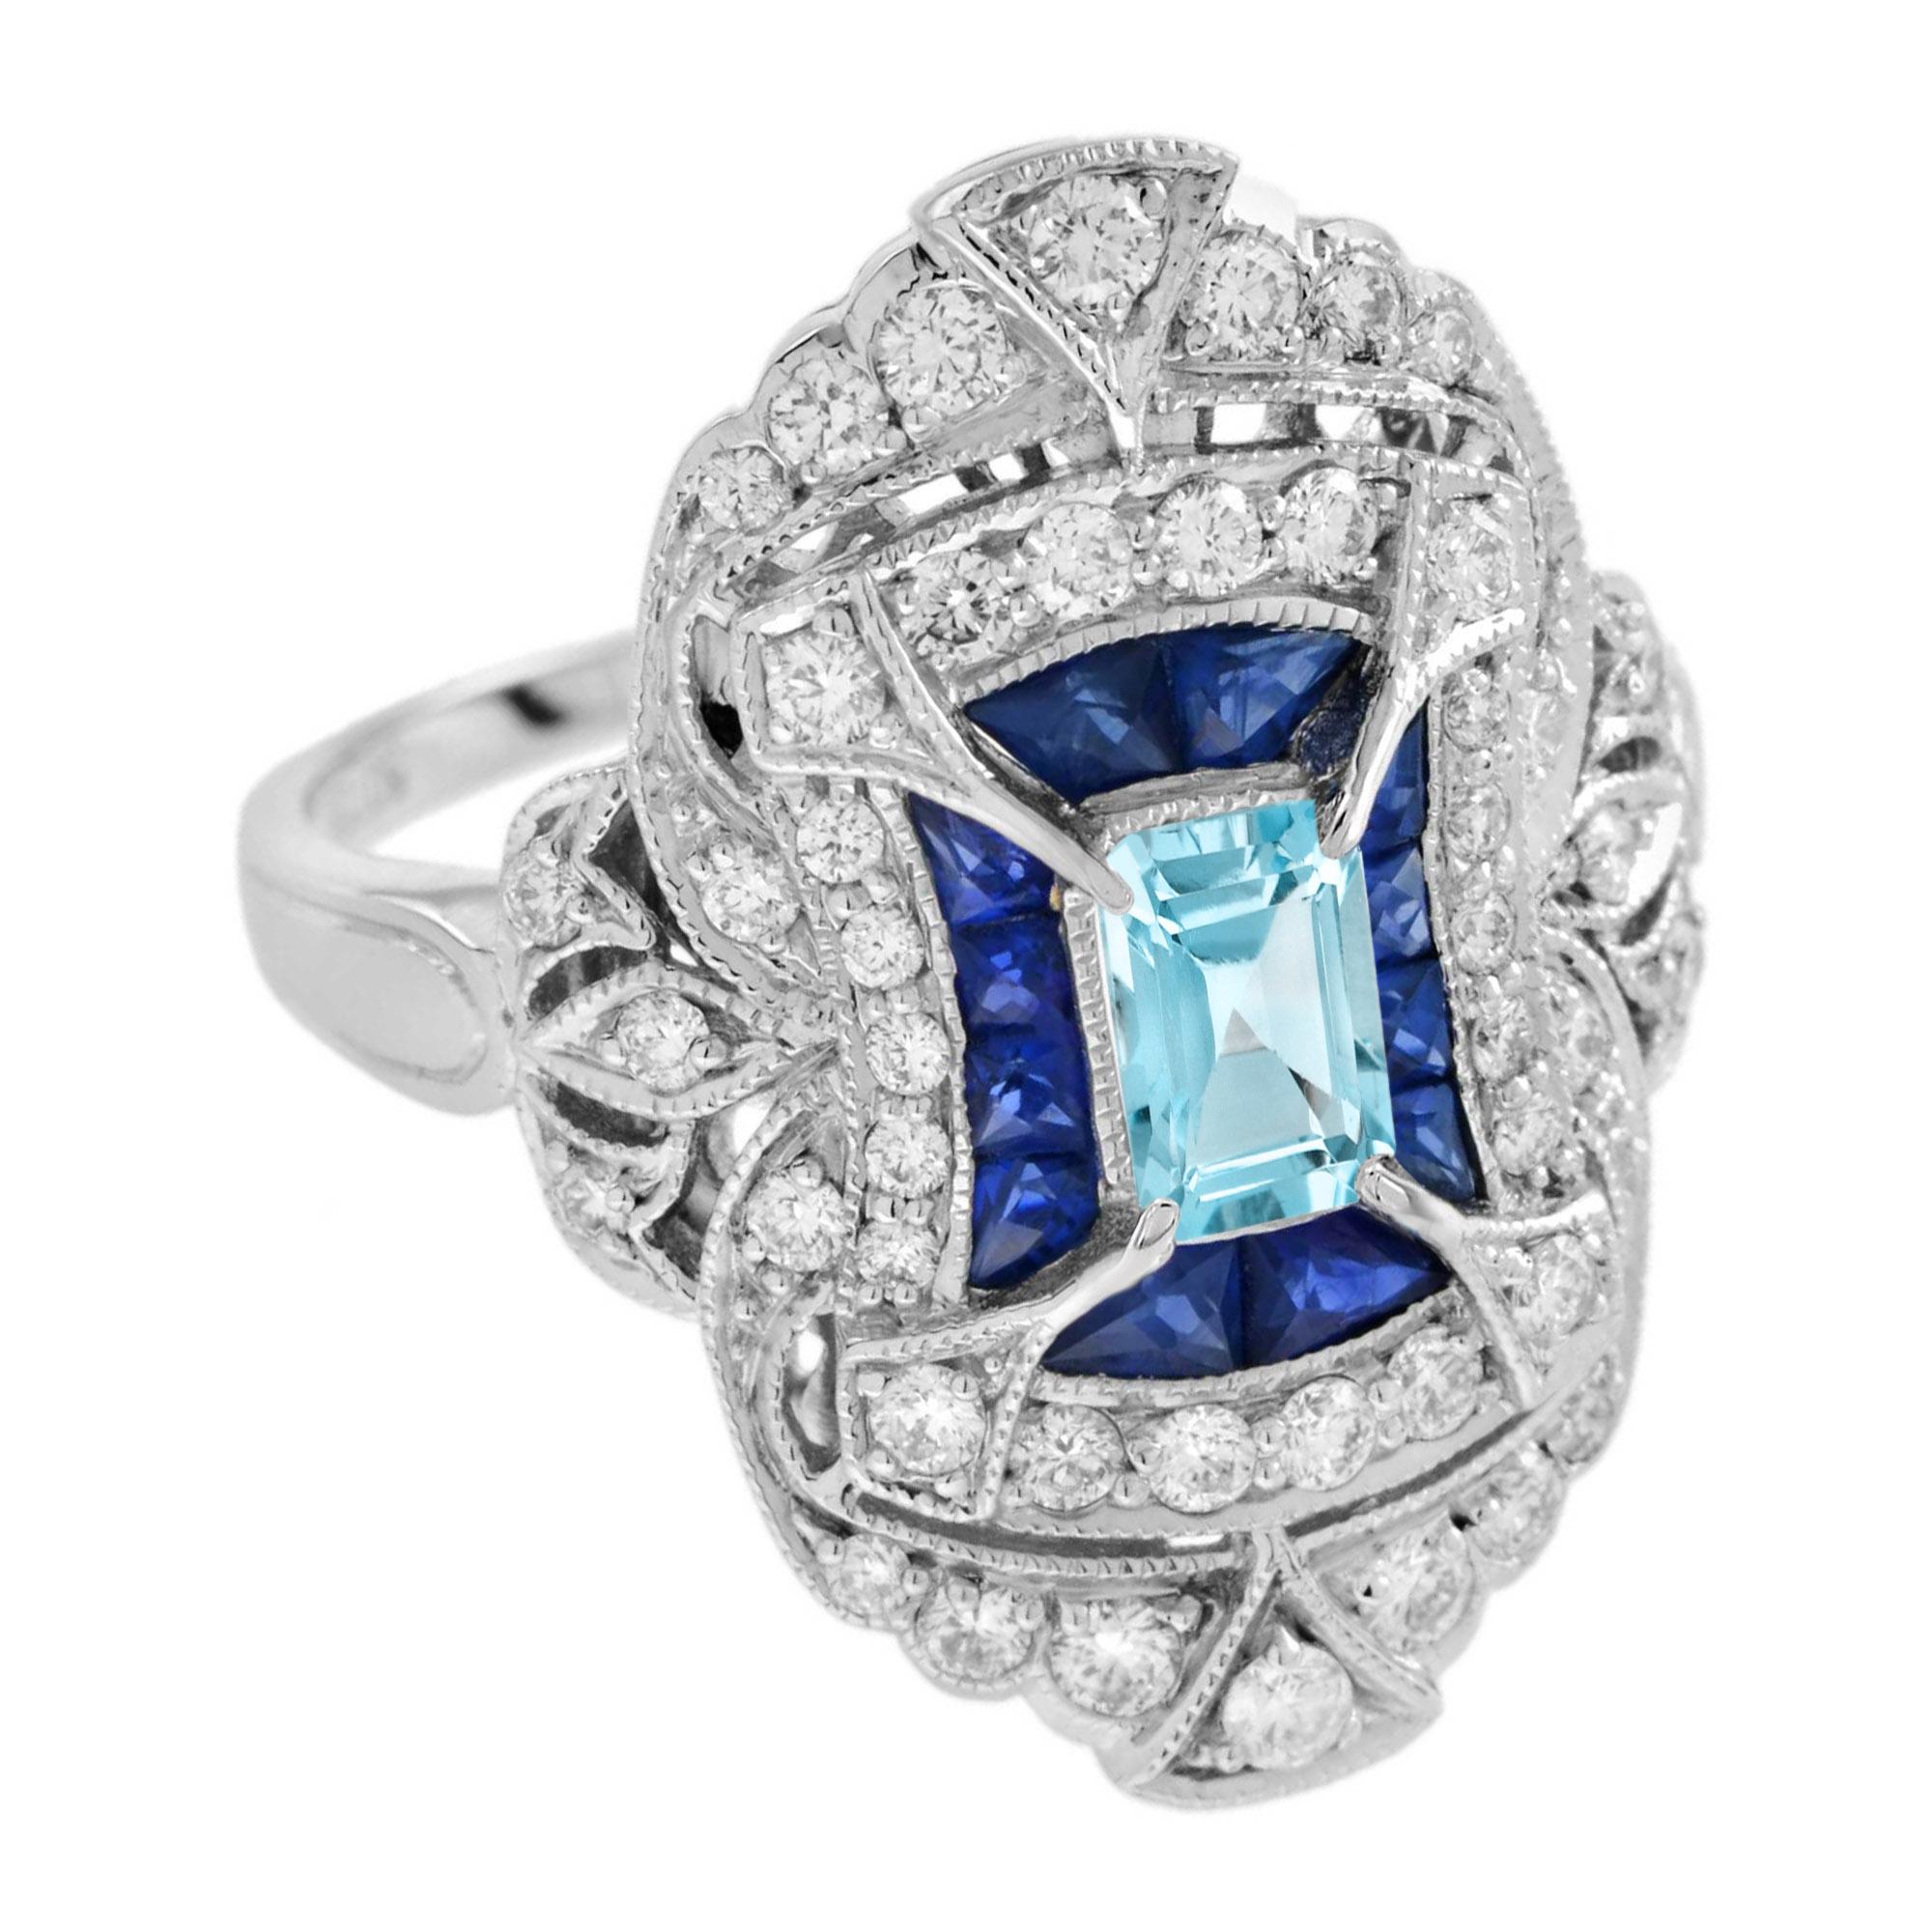 For Sale:  Aquamarine Blue Sapphire Diamond Art Deco Style Dinner Ring in 18K White Gold 3